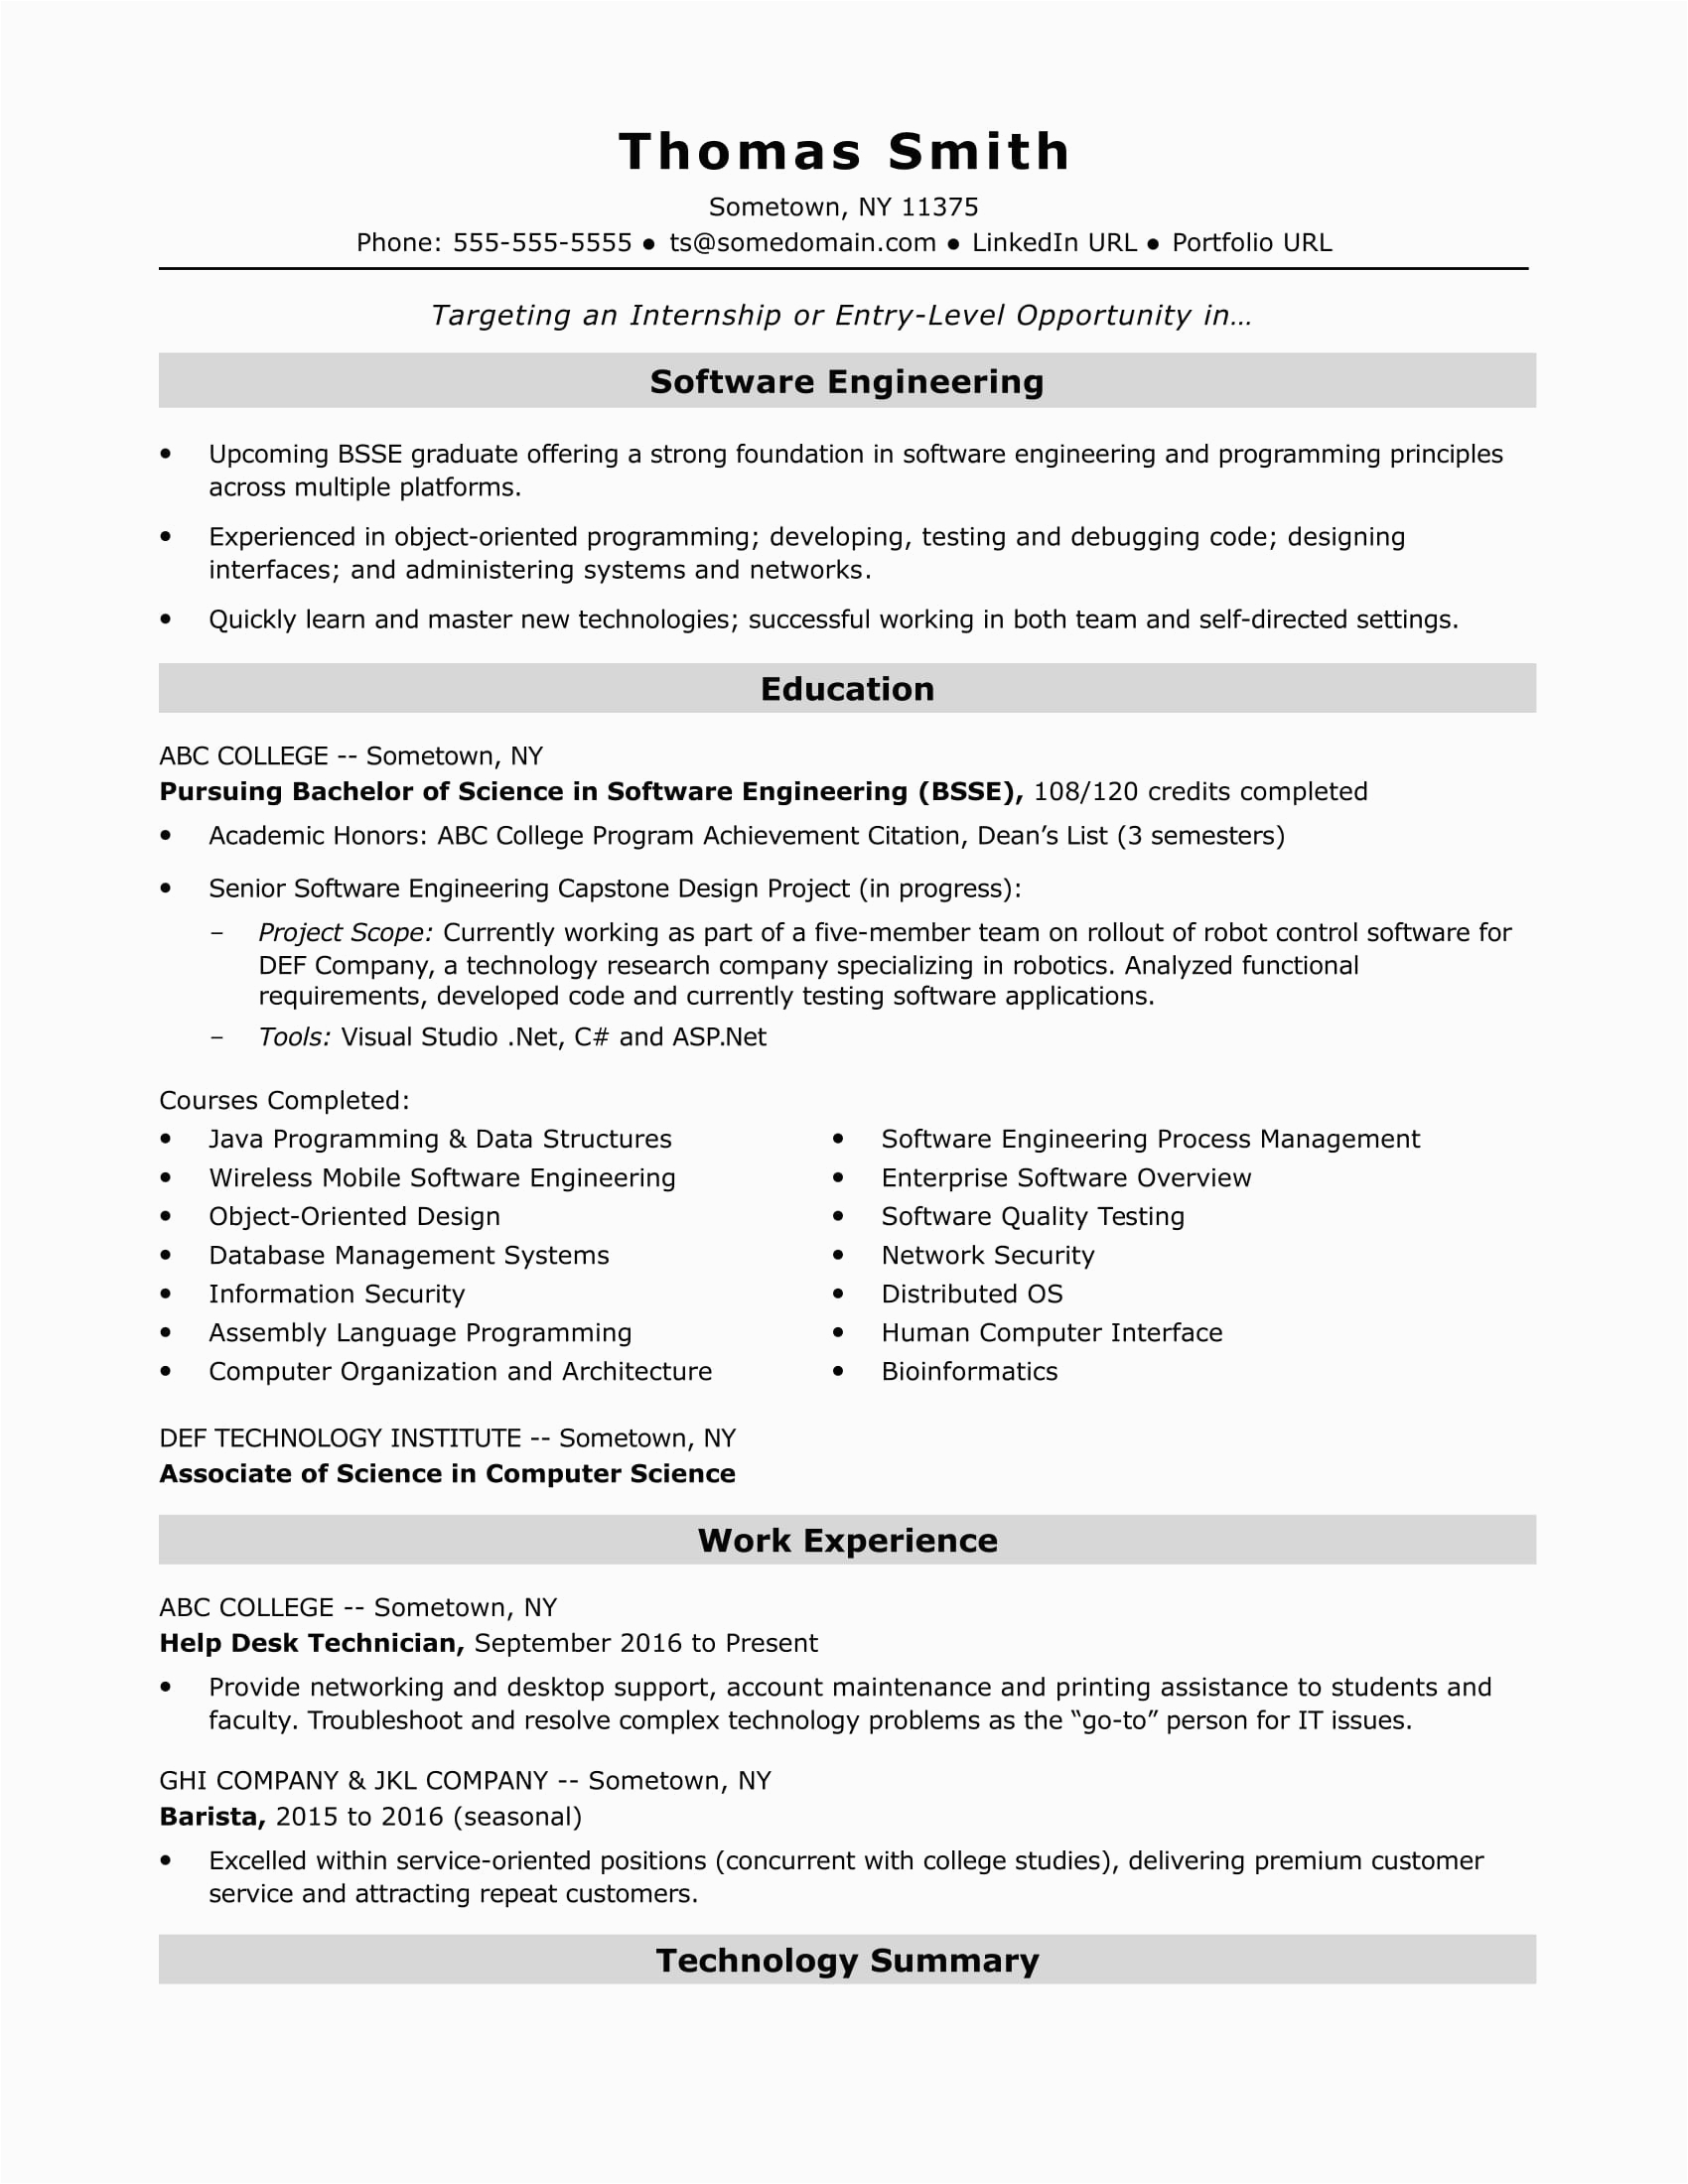 Sample Resume software Engineer Entry Level Entry Level software Engineer Resume Sample